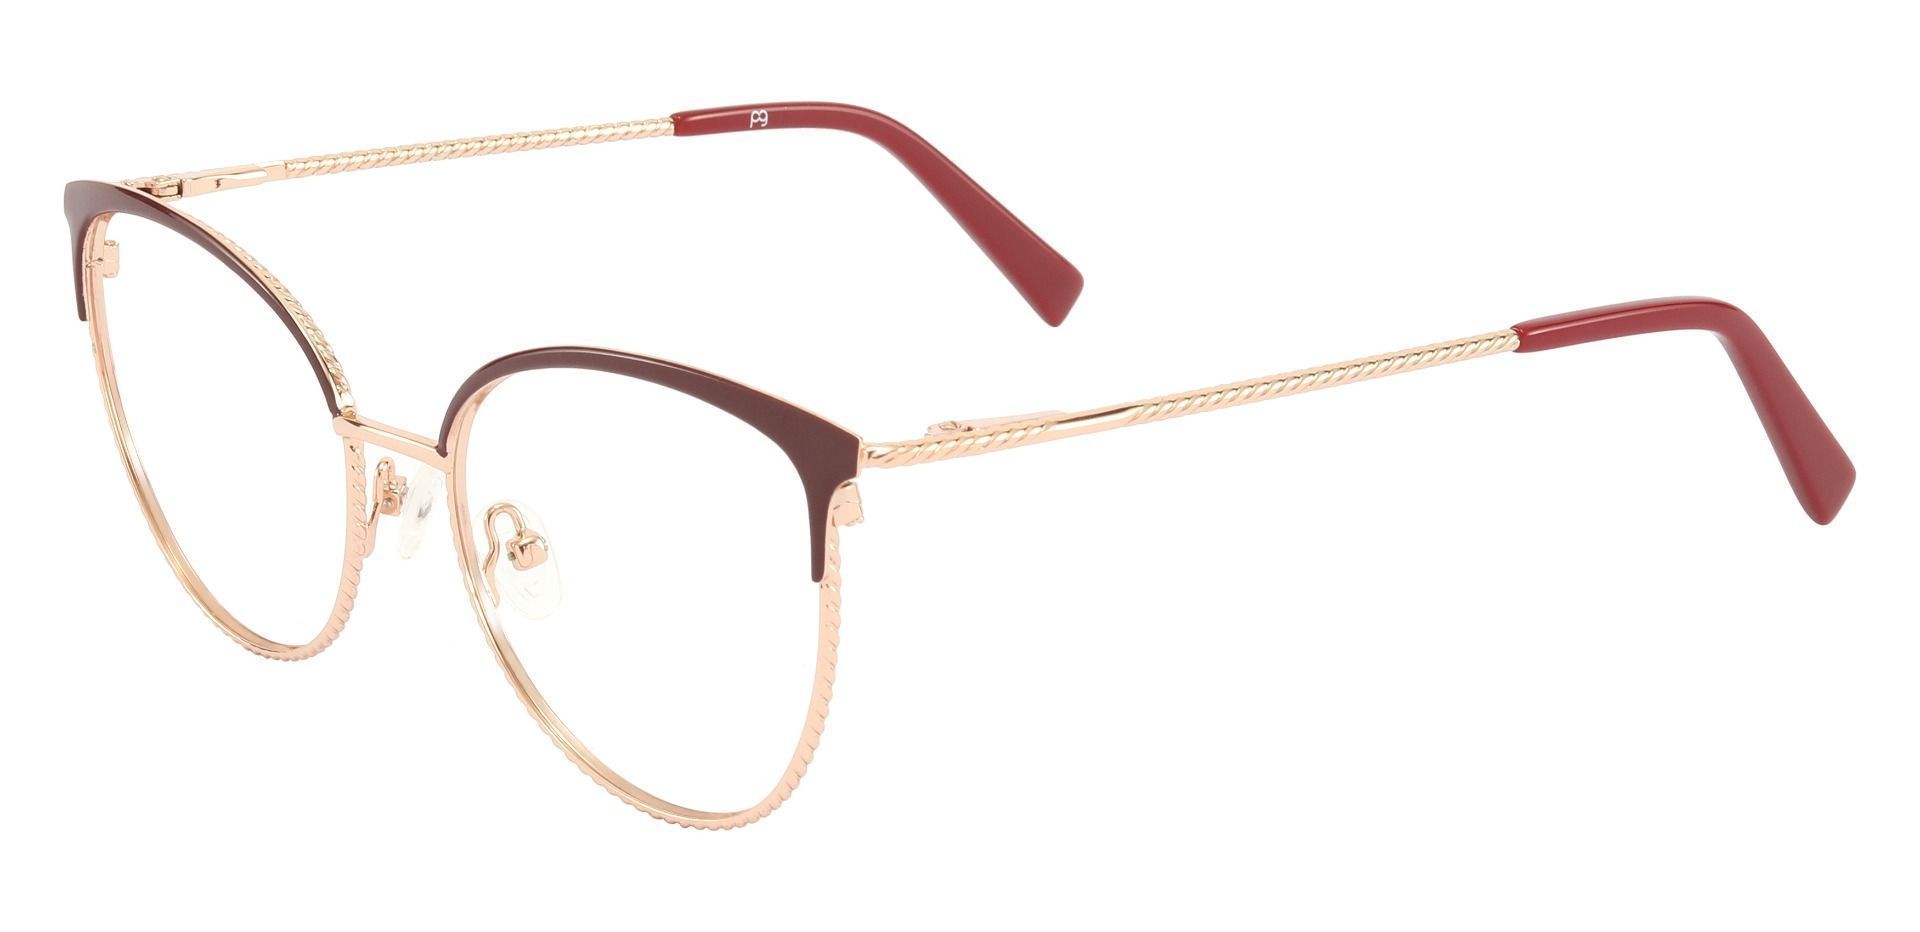 Tinora Cat Eye Lined Bifocal Glasses - Red